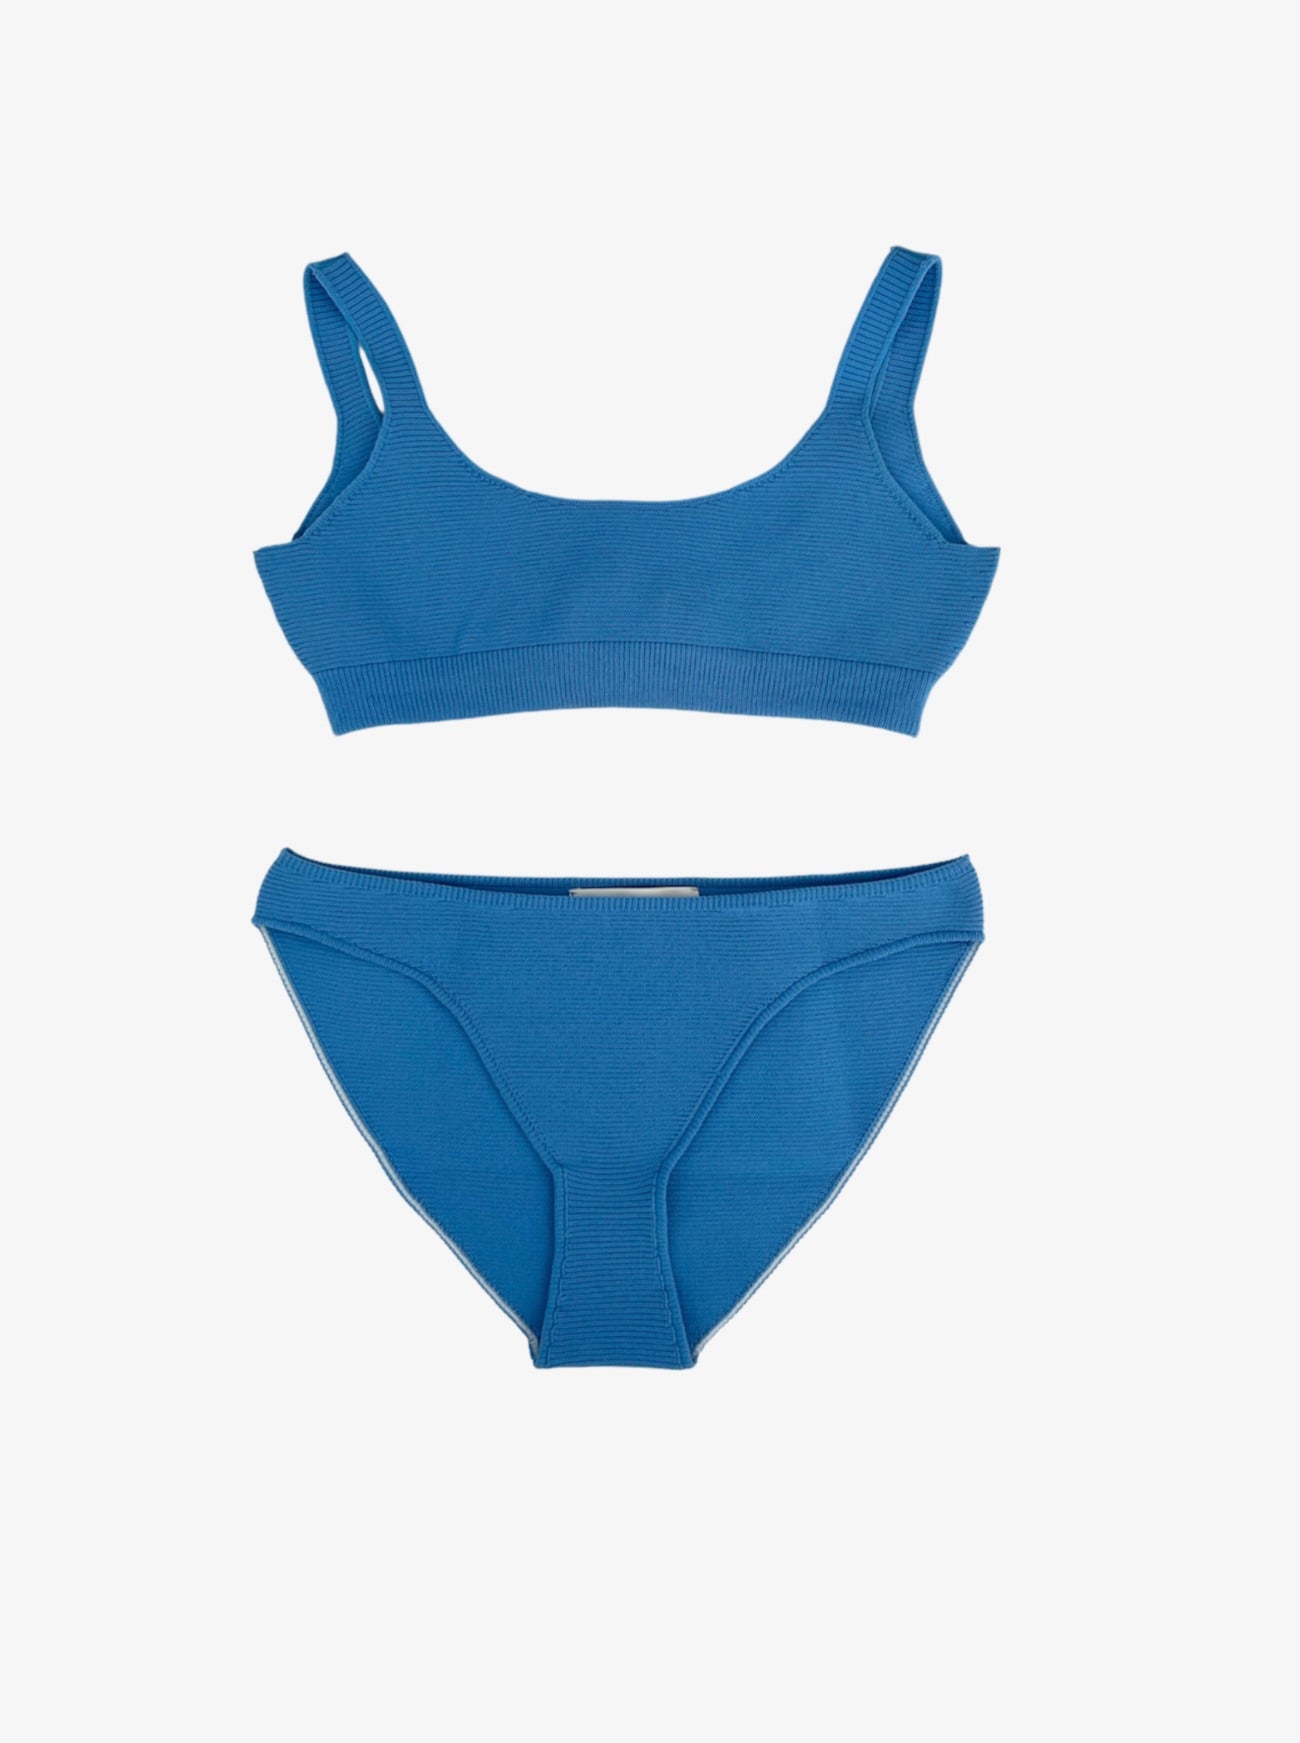 pacific blue swimsuit